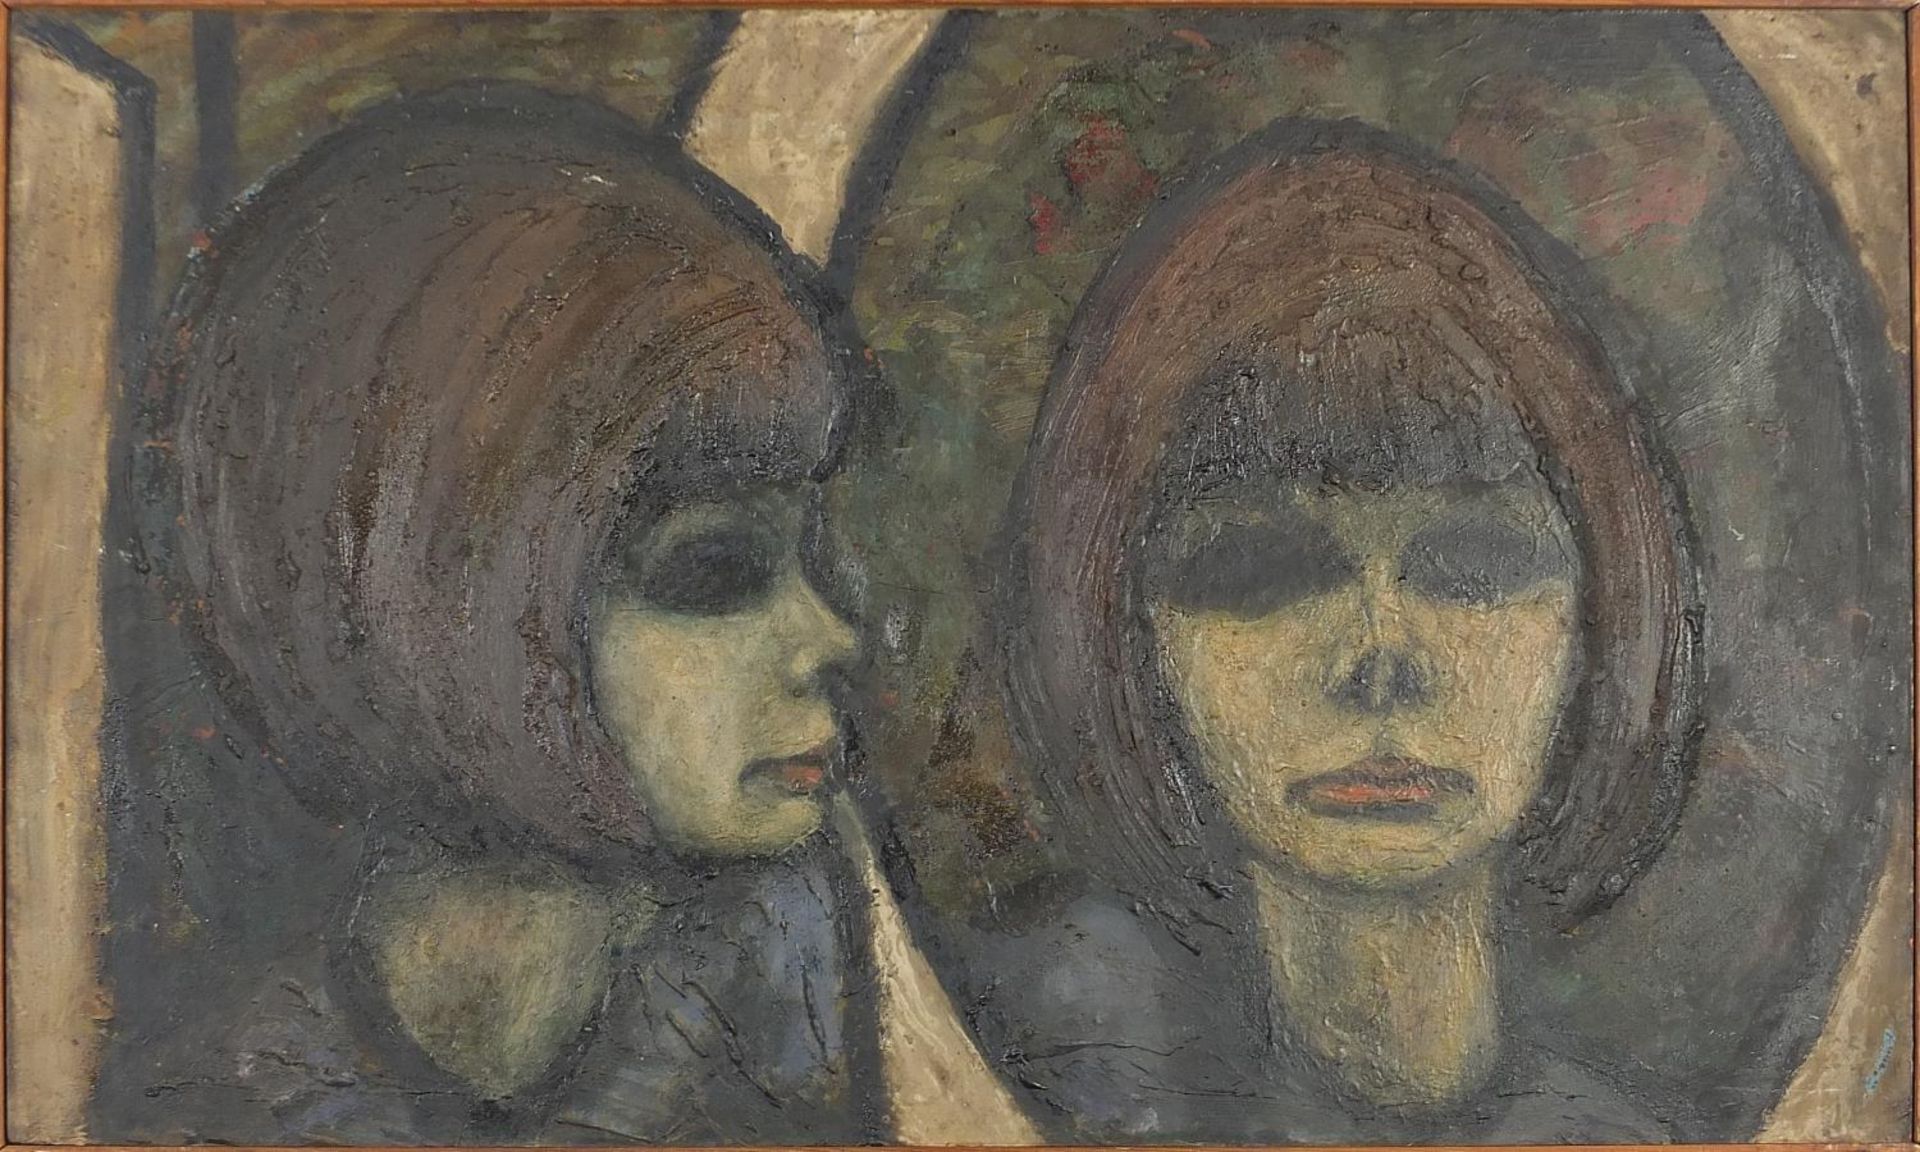 Girl's reflection in mirror, Modern British impasto oil on board, framed, 76.5cm x 45.5cm - Image 2 of 4